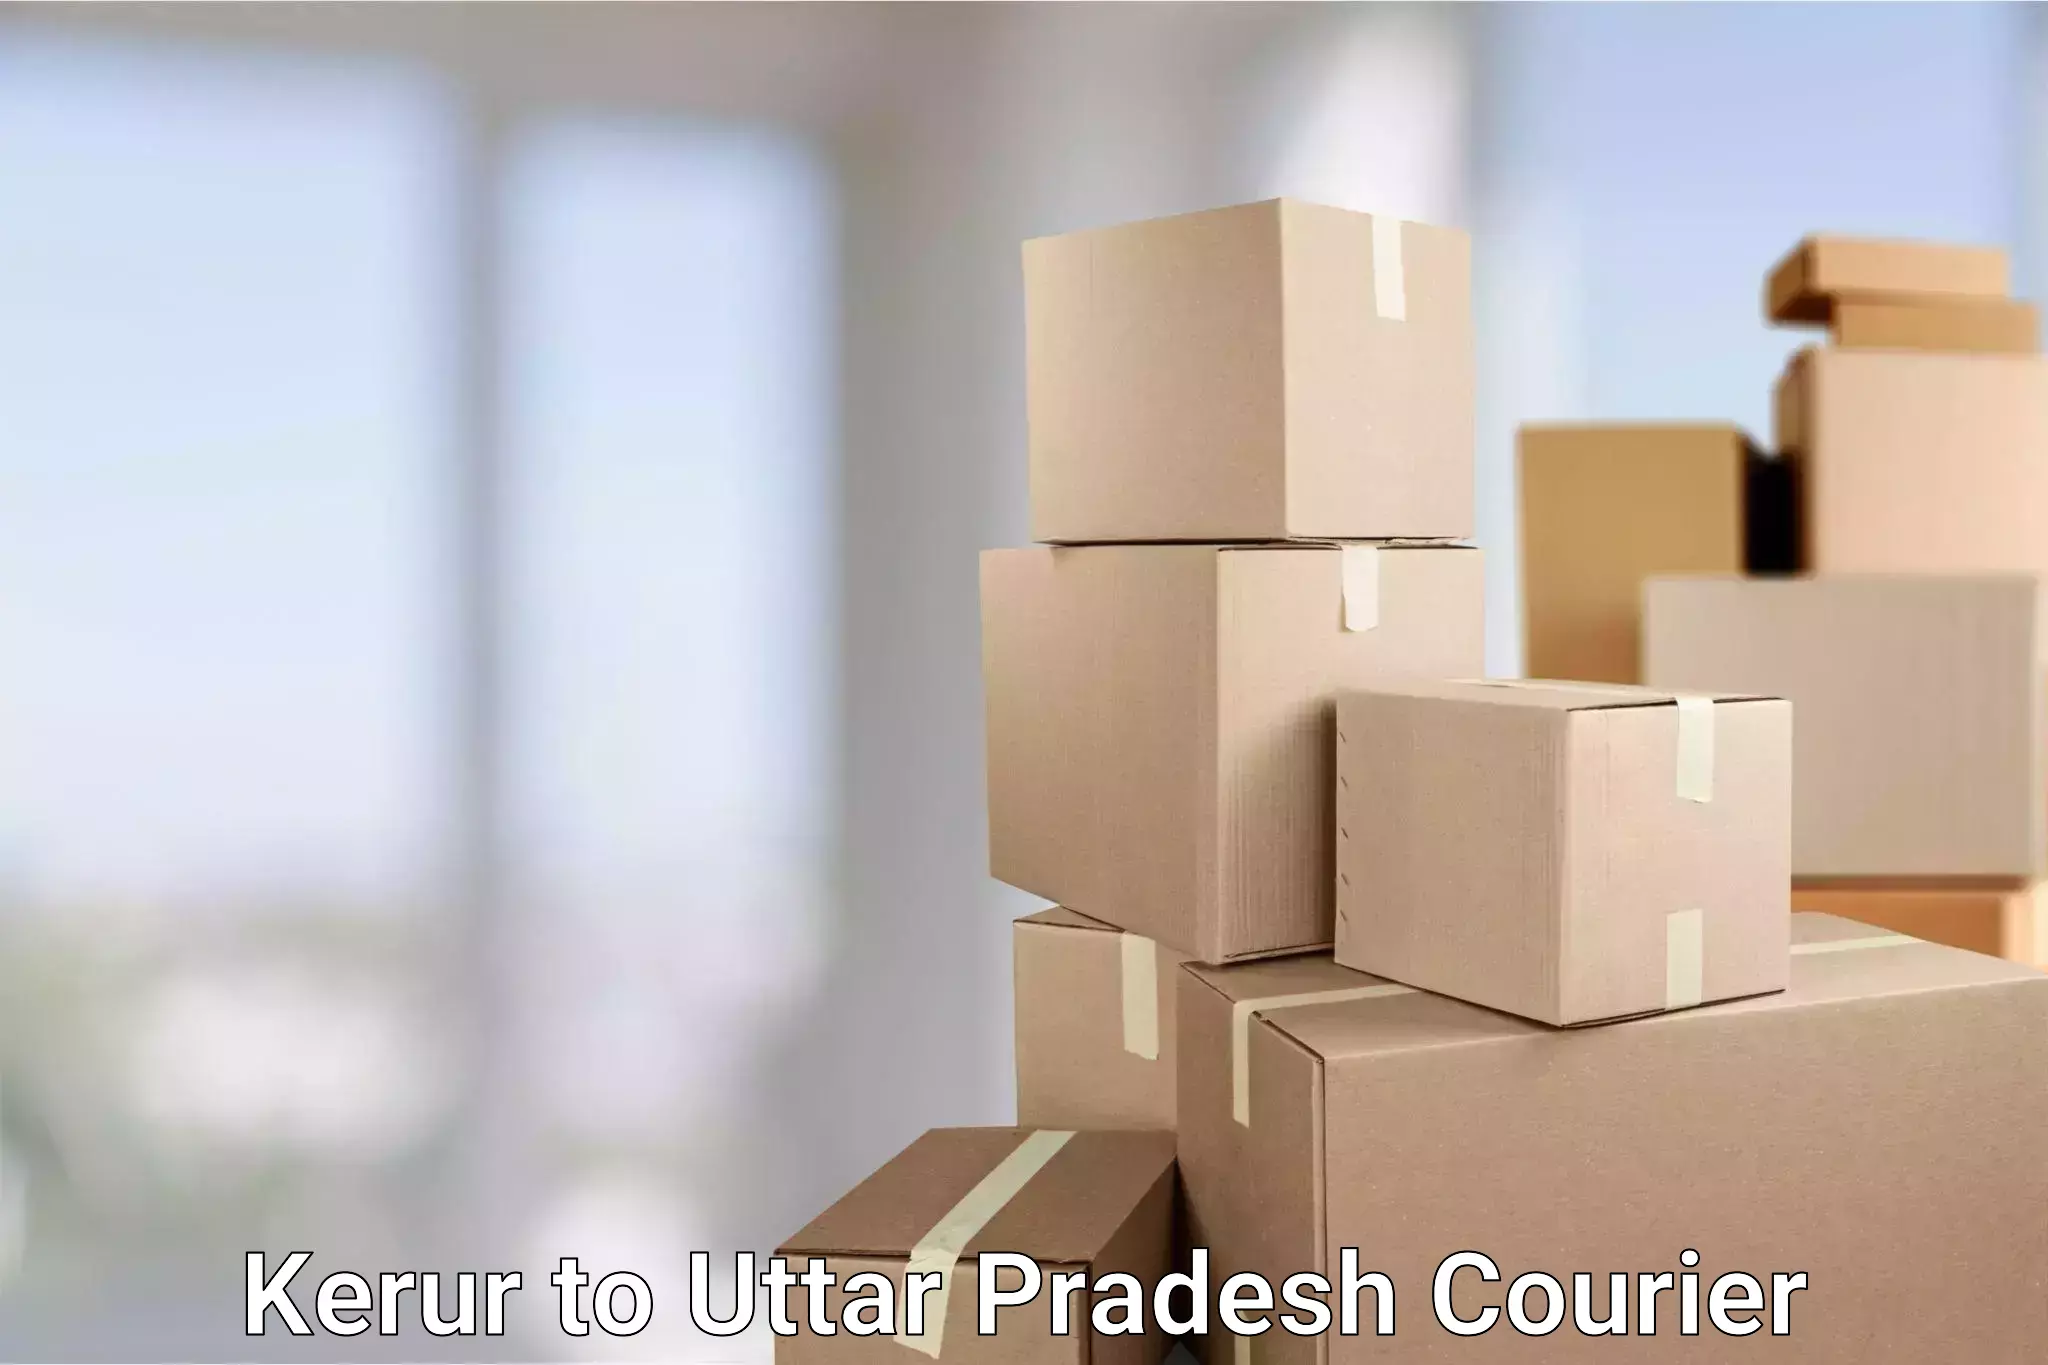 Professional parcel services Kerur to Madhoganj